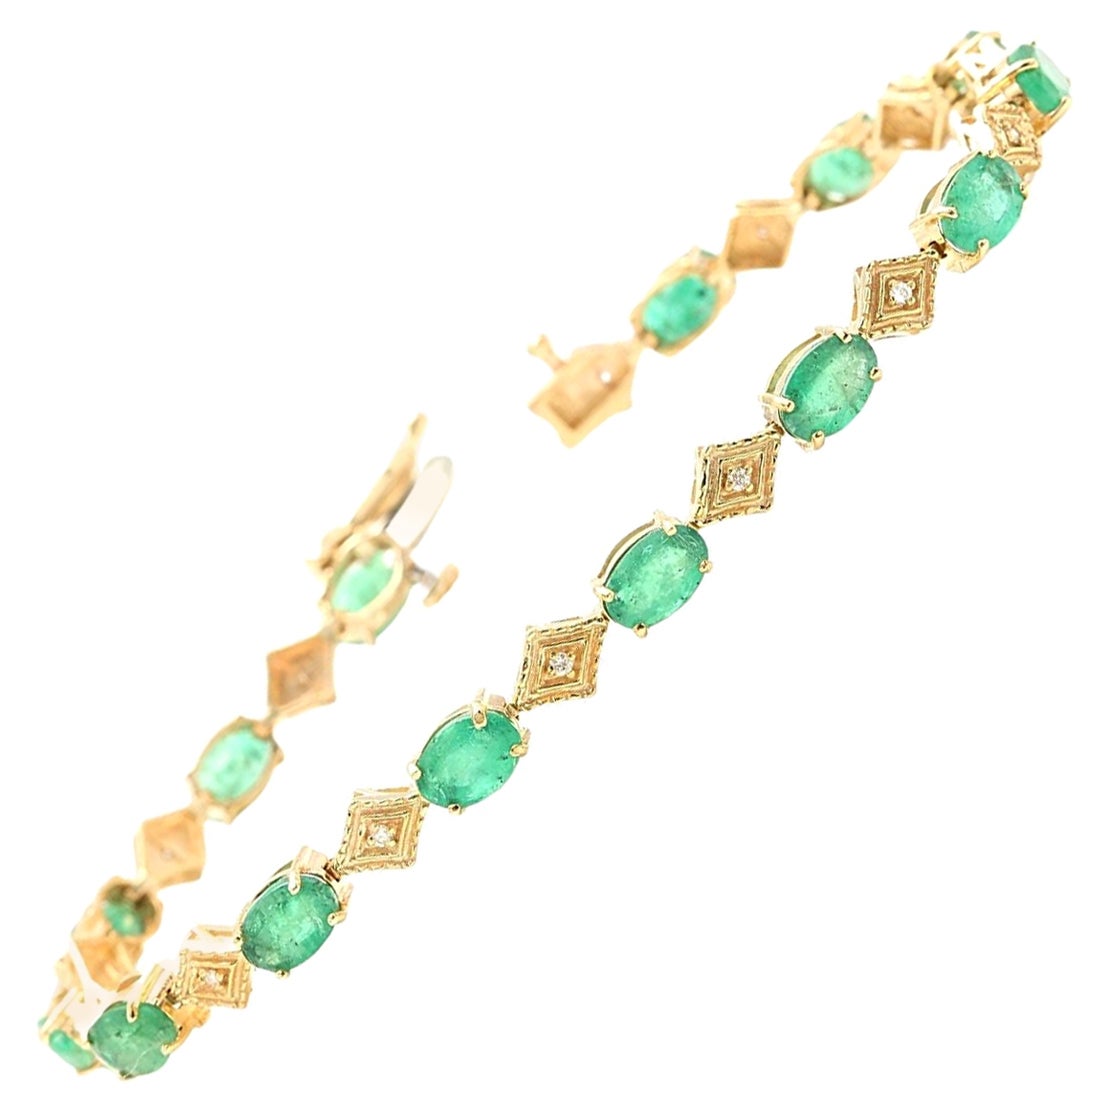 Impressive 9.15 Carats Natural Emerald & Diamond 14K Solid Yellow Gold Bracelet For Sale